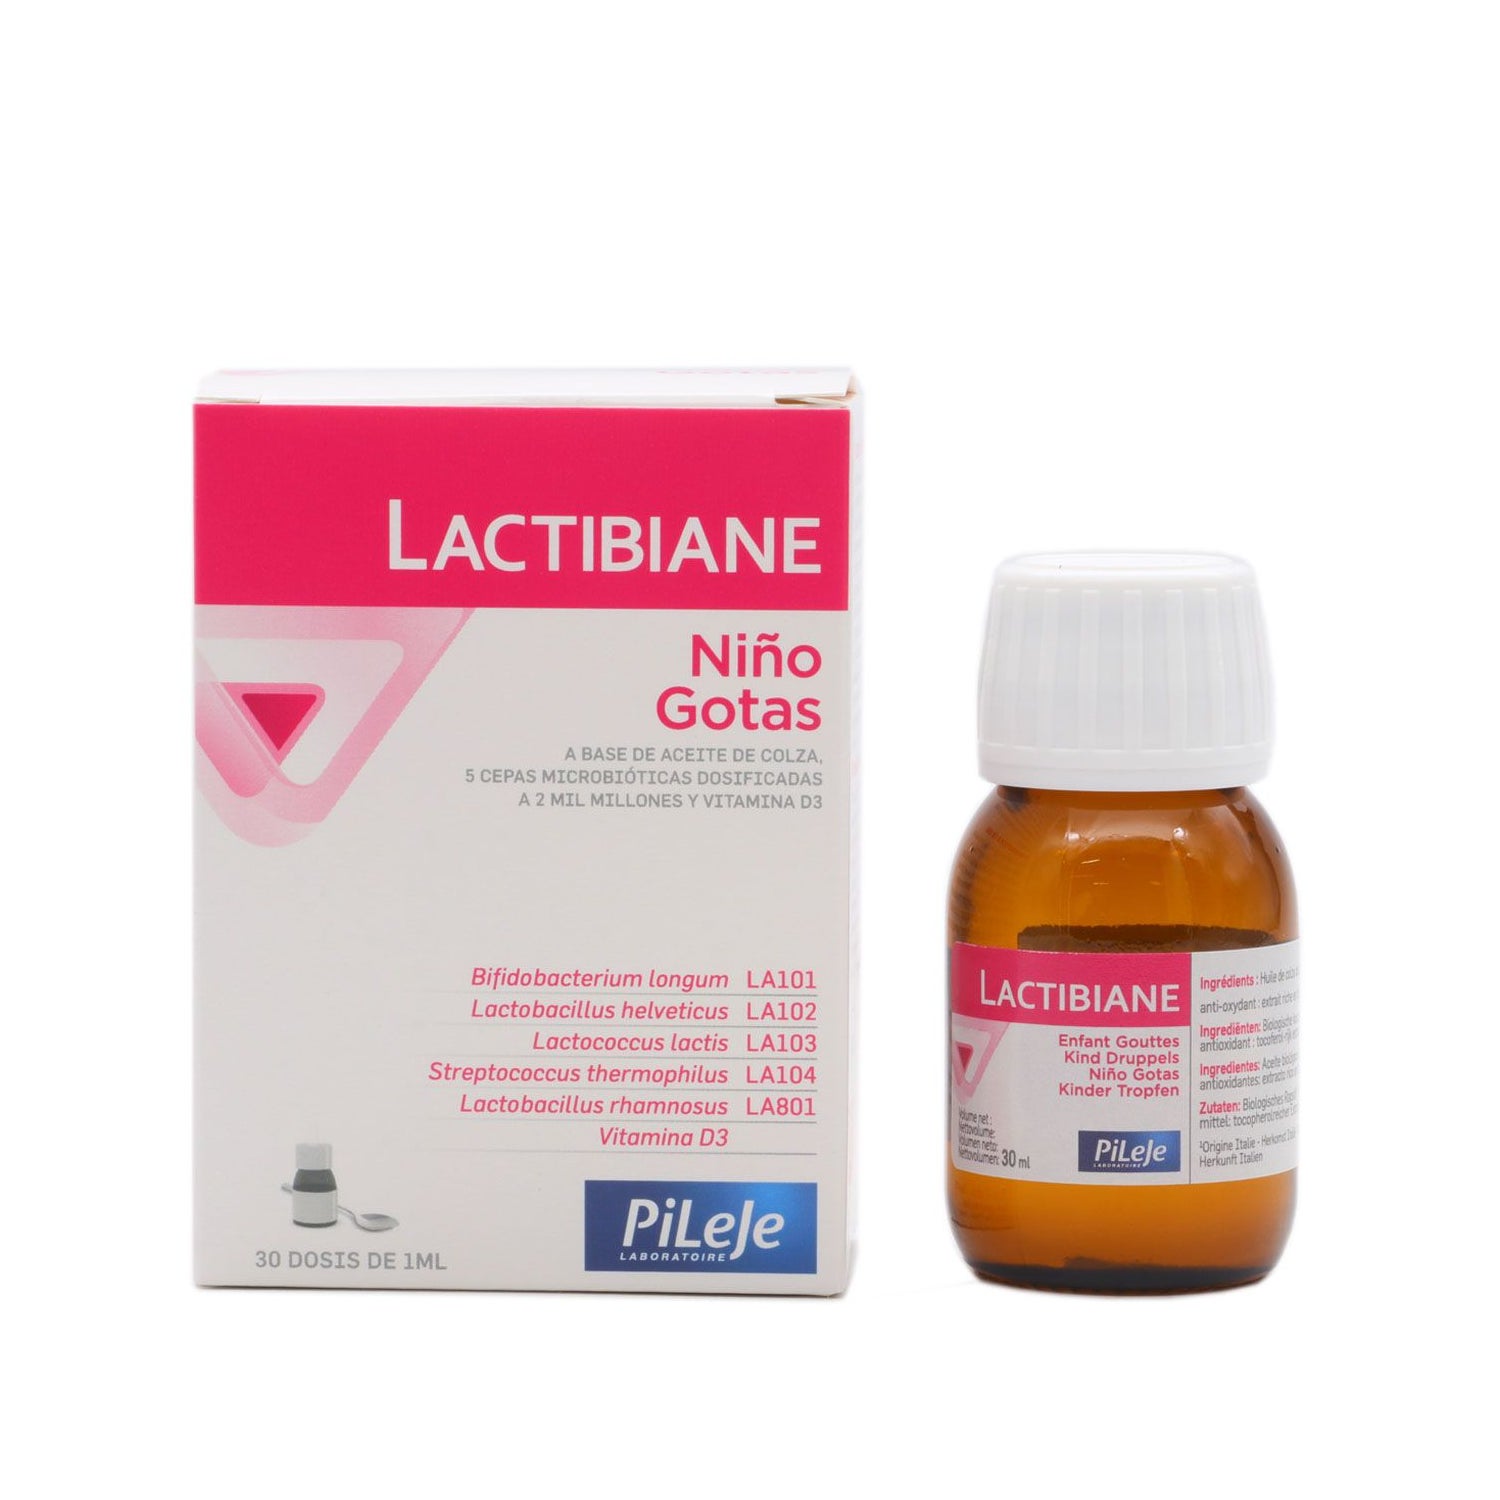 Lactibiane Tolerance 30 sachets of 2.5 g 